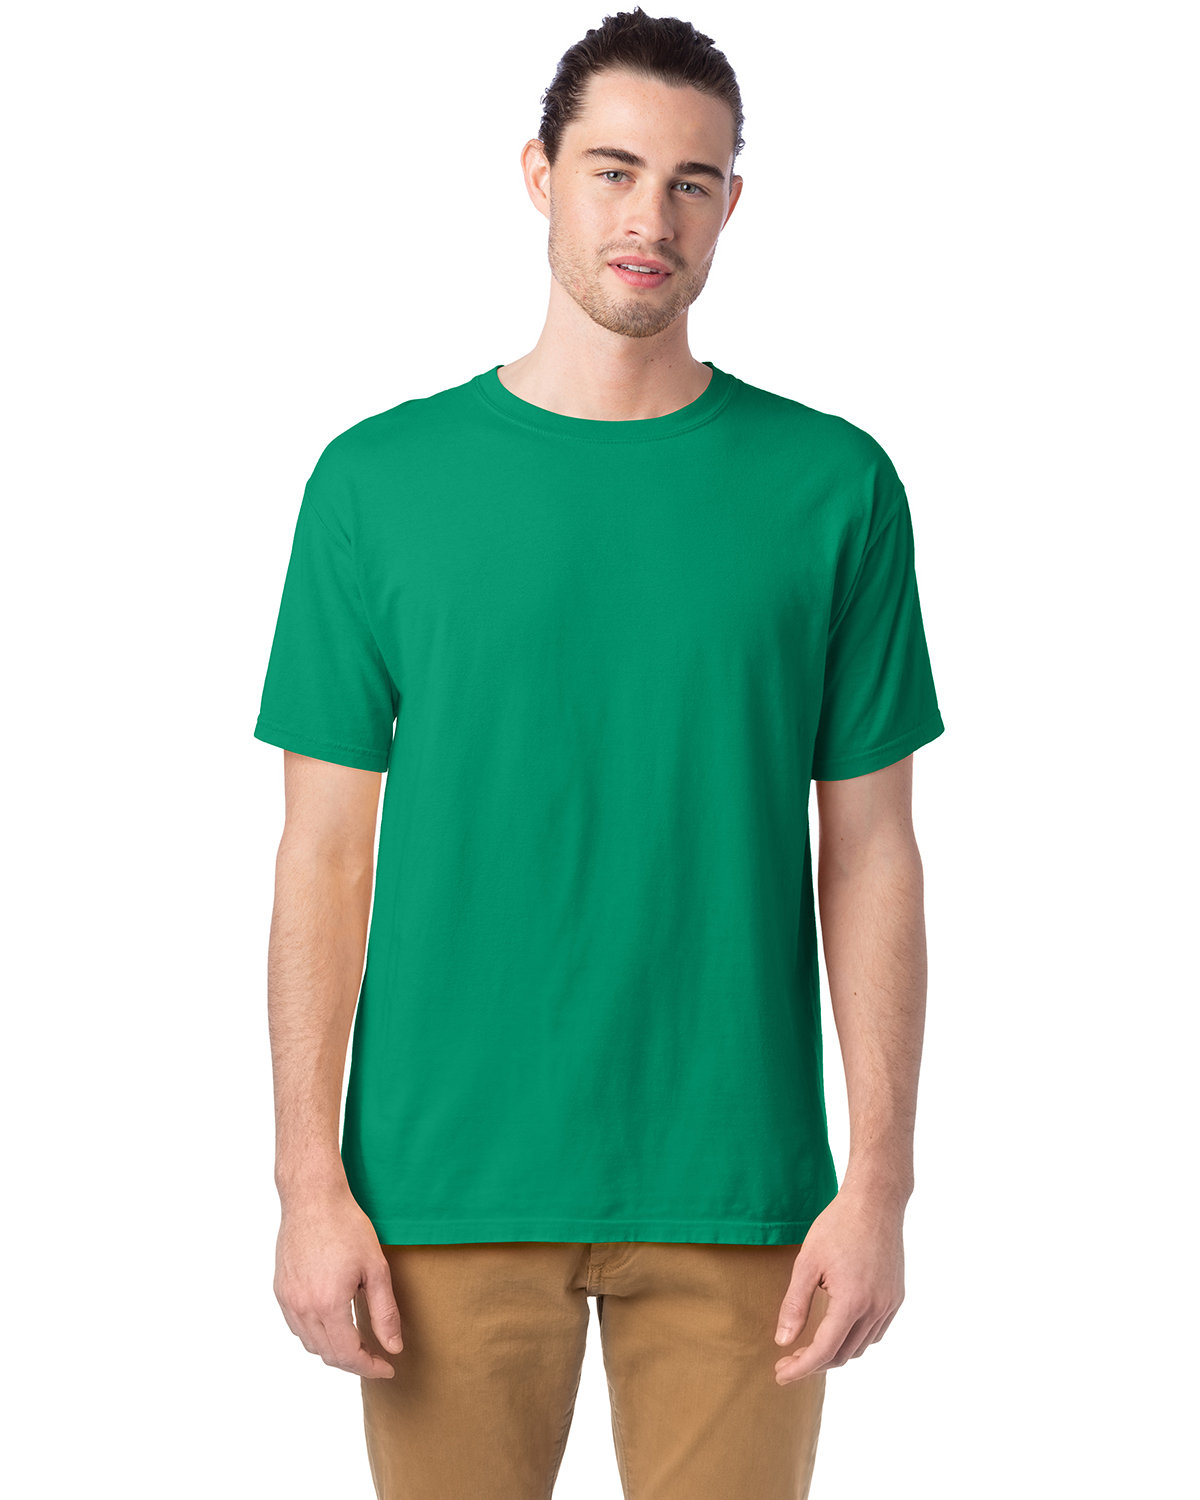 ComfortWash by Hanes Men's Garment-Dyed T-Shirt RICH GREEN GRASS 